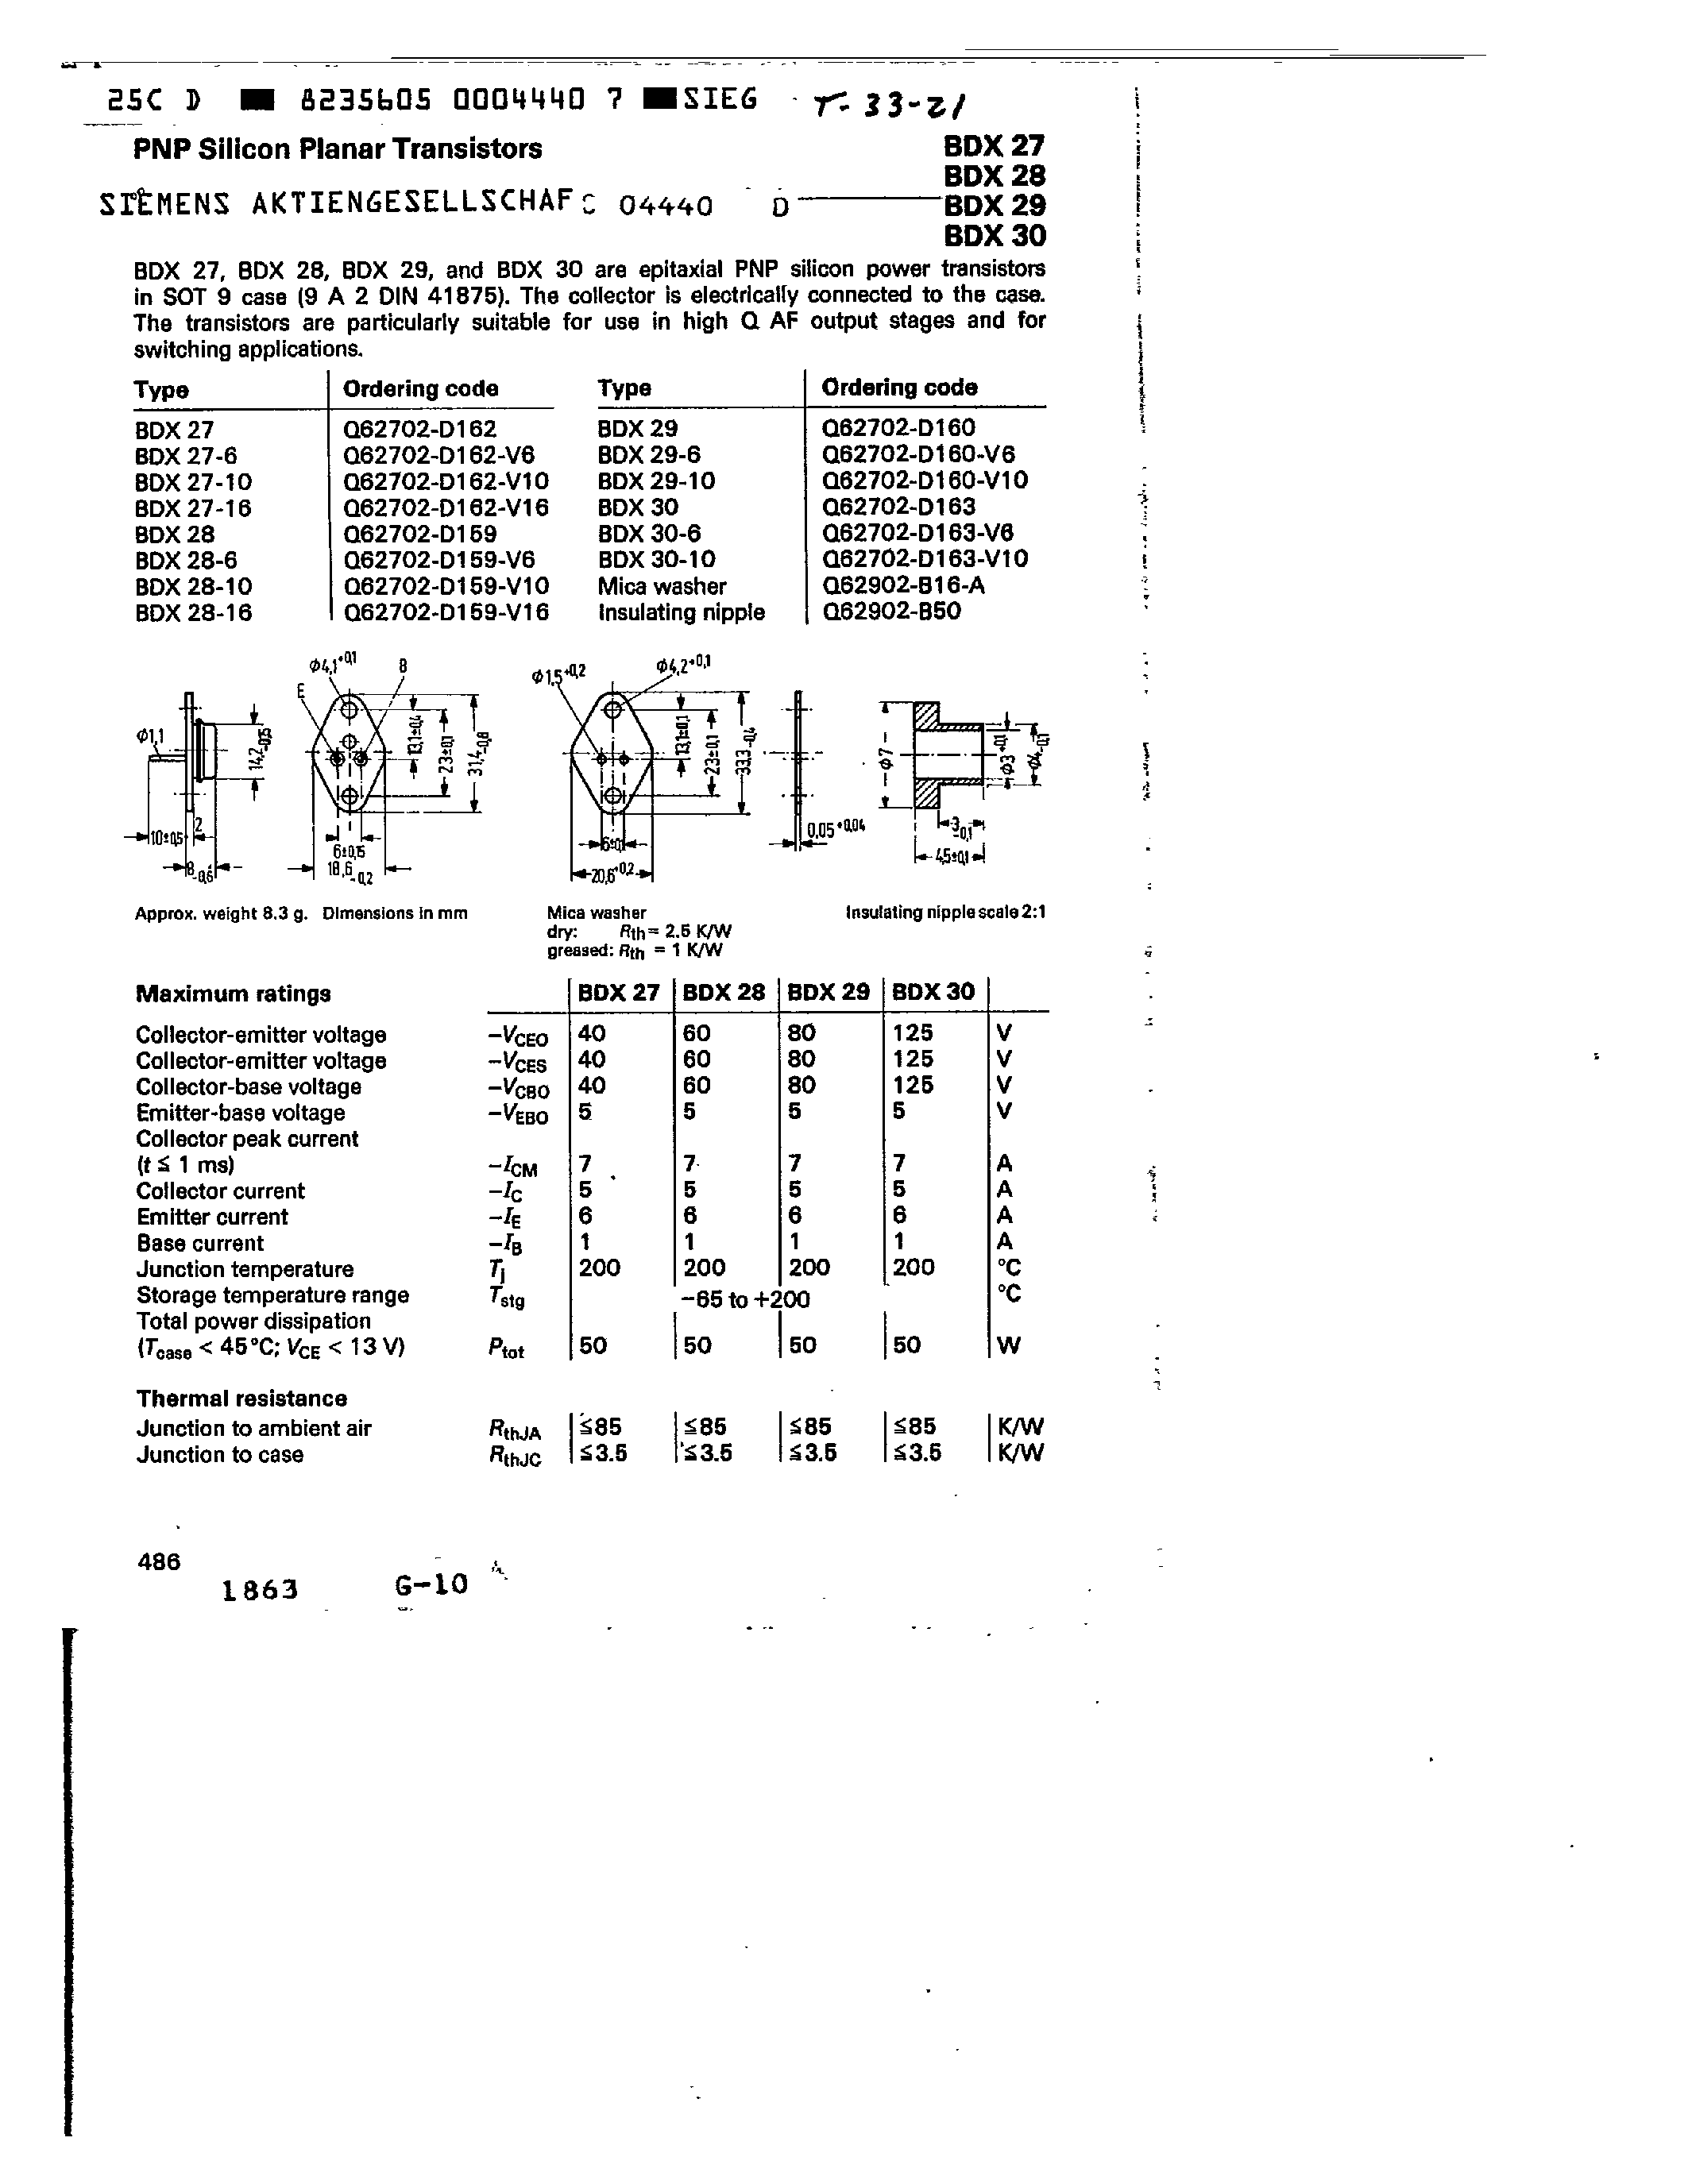 Datasheet BDX28 - PNP SILICON PLANAR TRANSISTORS page 1